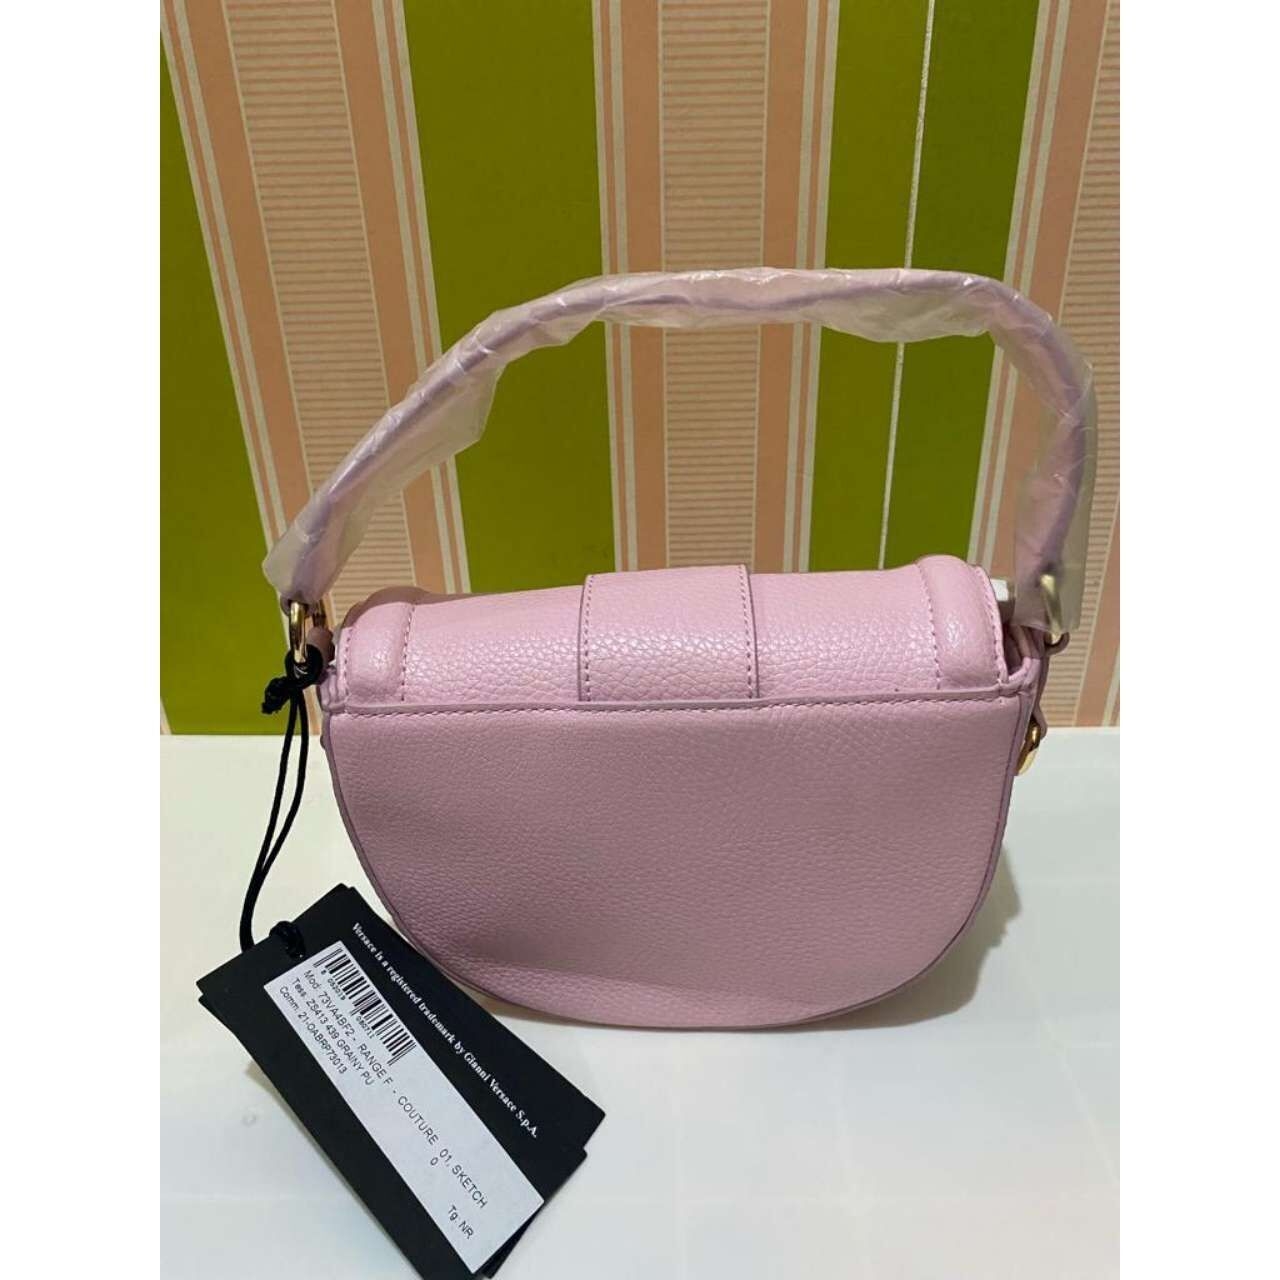 Versace Jeans Couture Pink Handbag